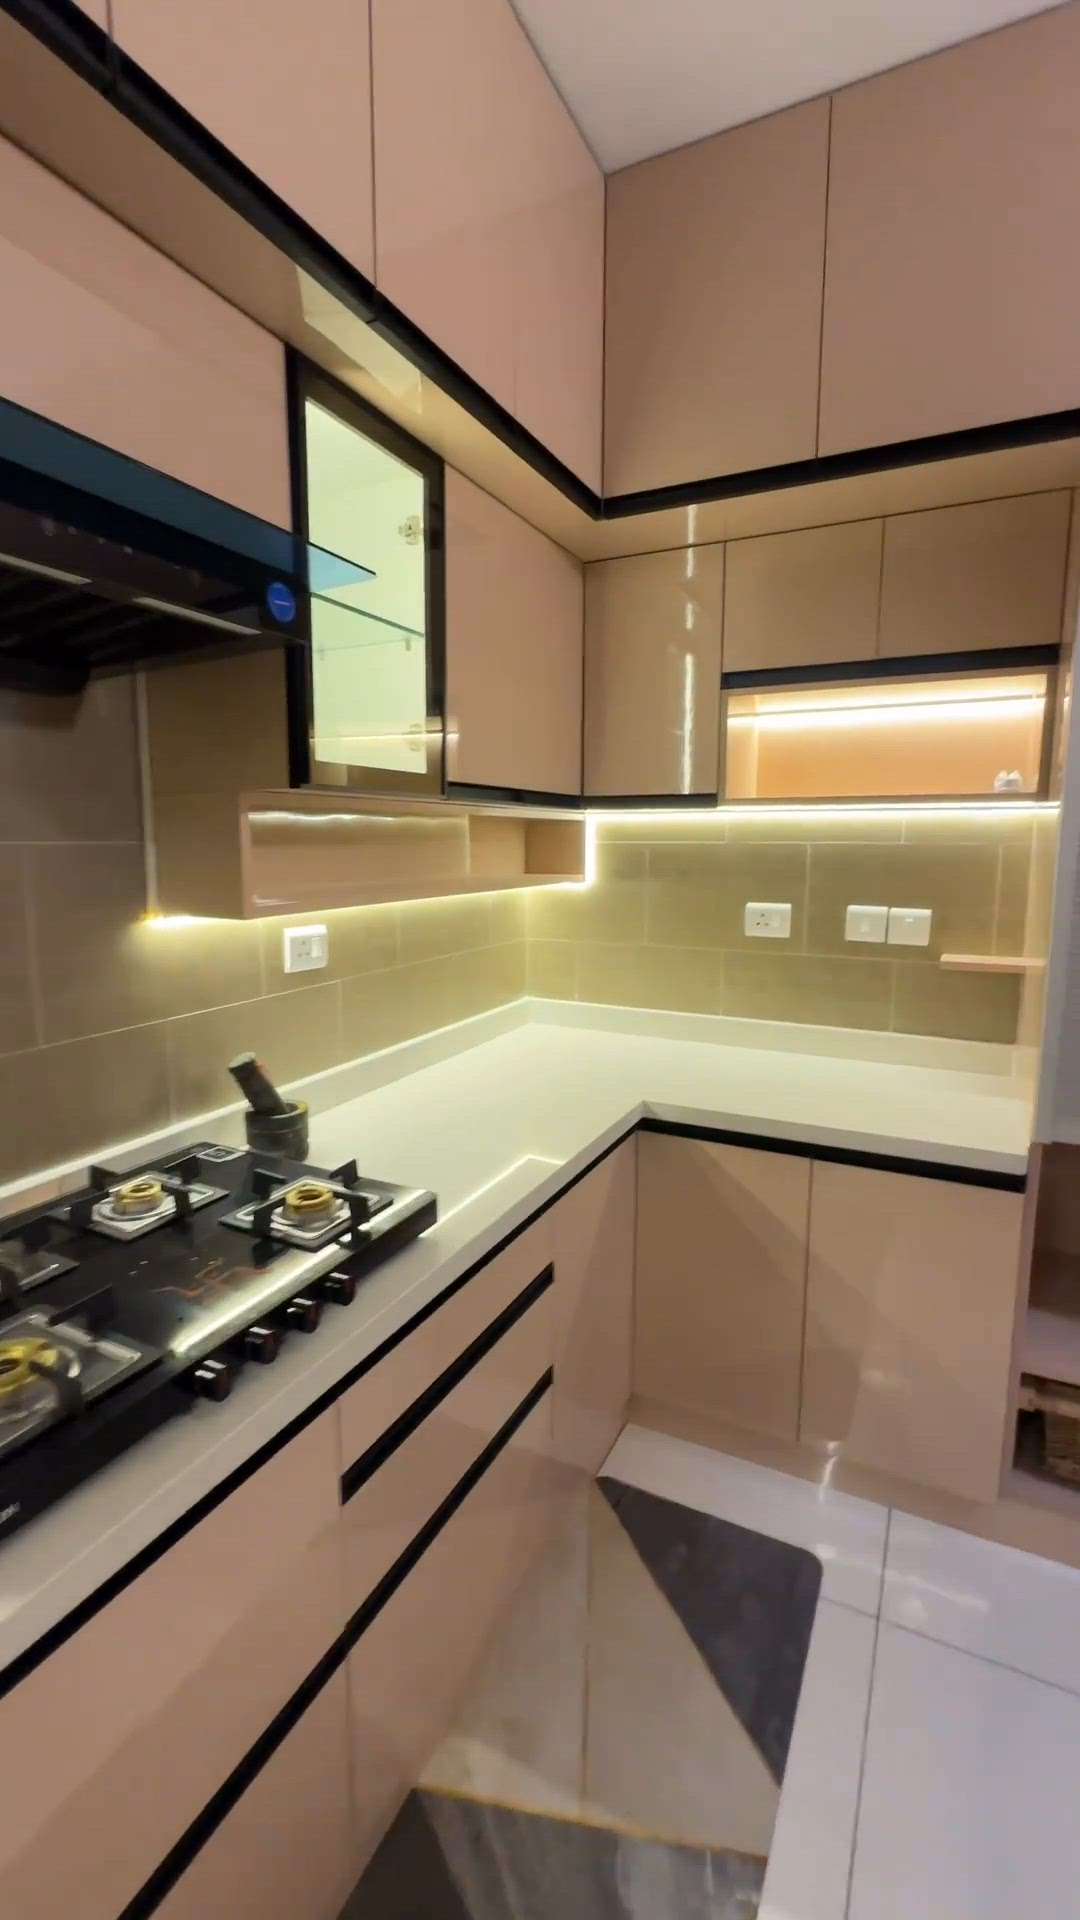 Modular kitchen?

Contact us:- 99299-15722

#ModularKitchen #modularwardrobe #modularwardrobe #InteriorDesigner #Architectural&Interior #KitchenInterior #LUXURY_INTERIOR #LivingroomDesigns #WardrobeIdeas #CustomizedWardrobe #WalkInWardrobe #CustomizedWardrobe #3DoorWardrobe